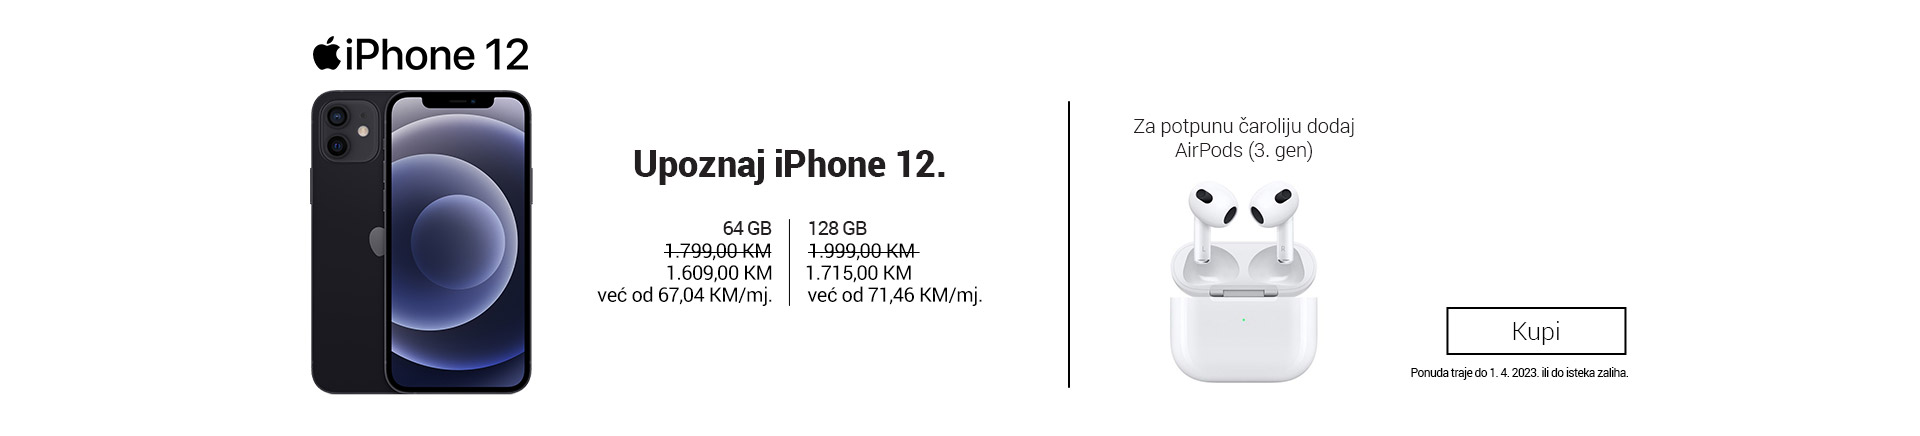 BA APPLE iPhone 12 Upoznaj MOBILE 380 X 436.jpg